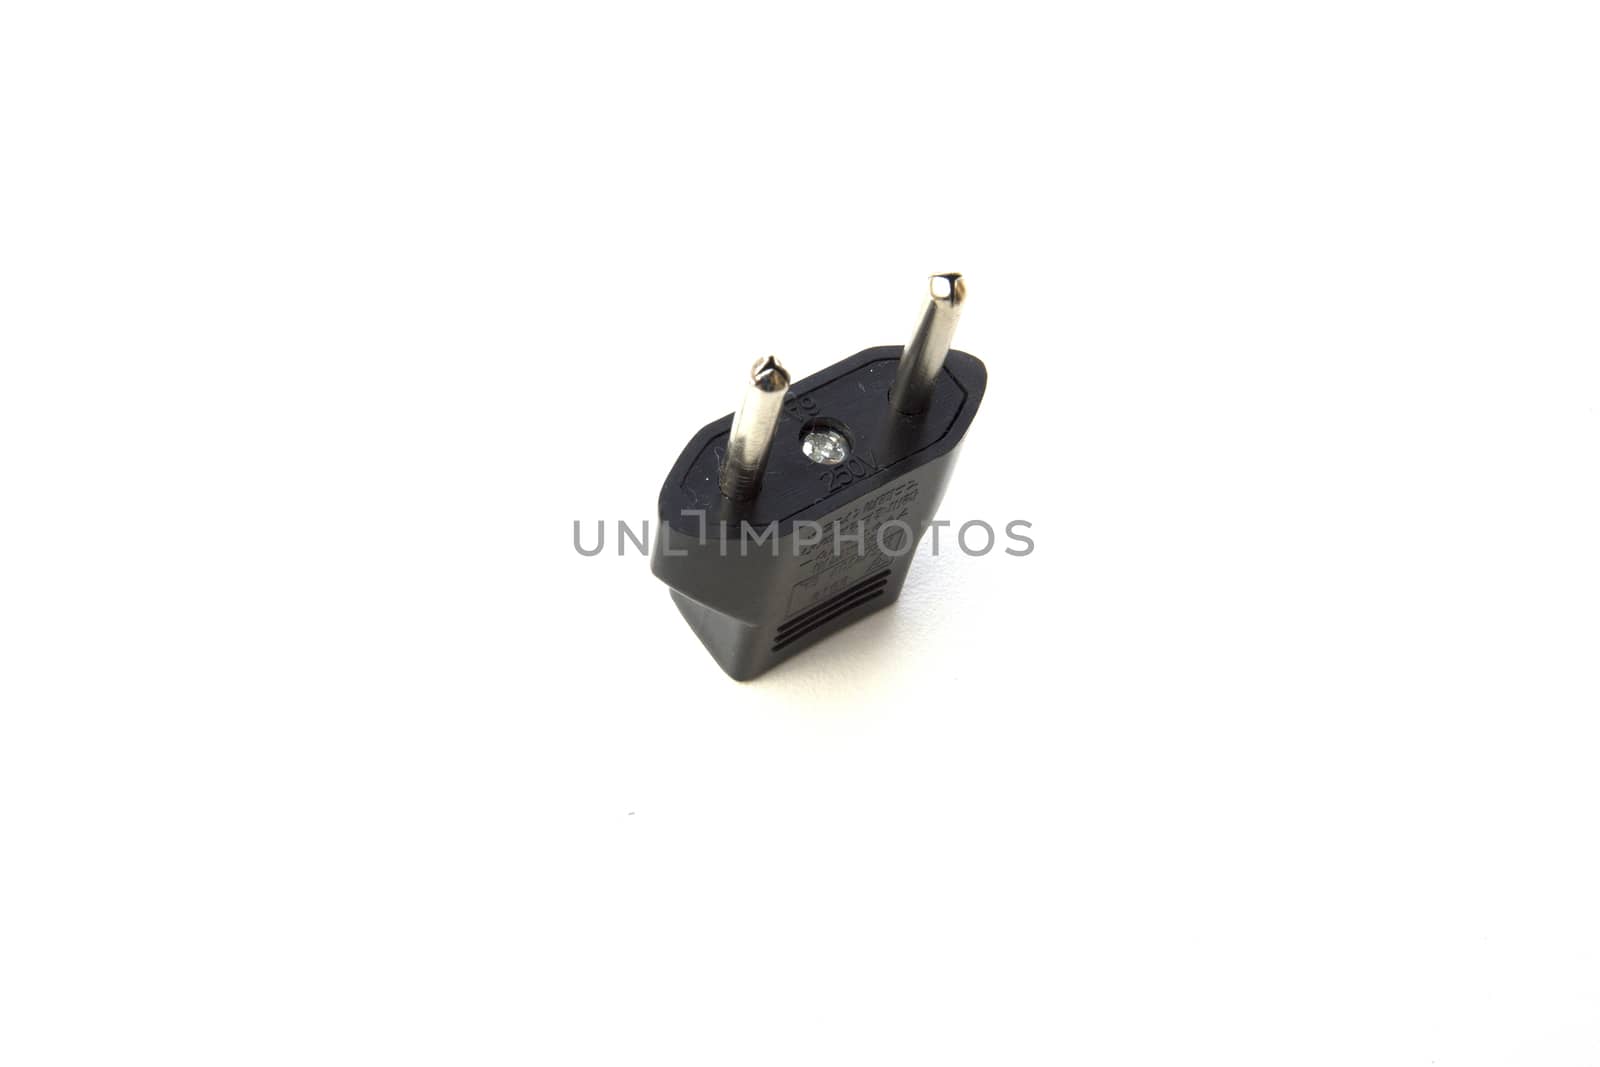 Black plug adapter on white background. by sonandonures